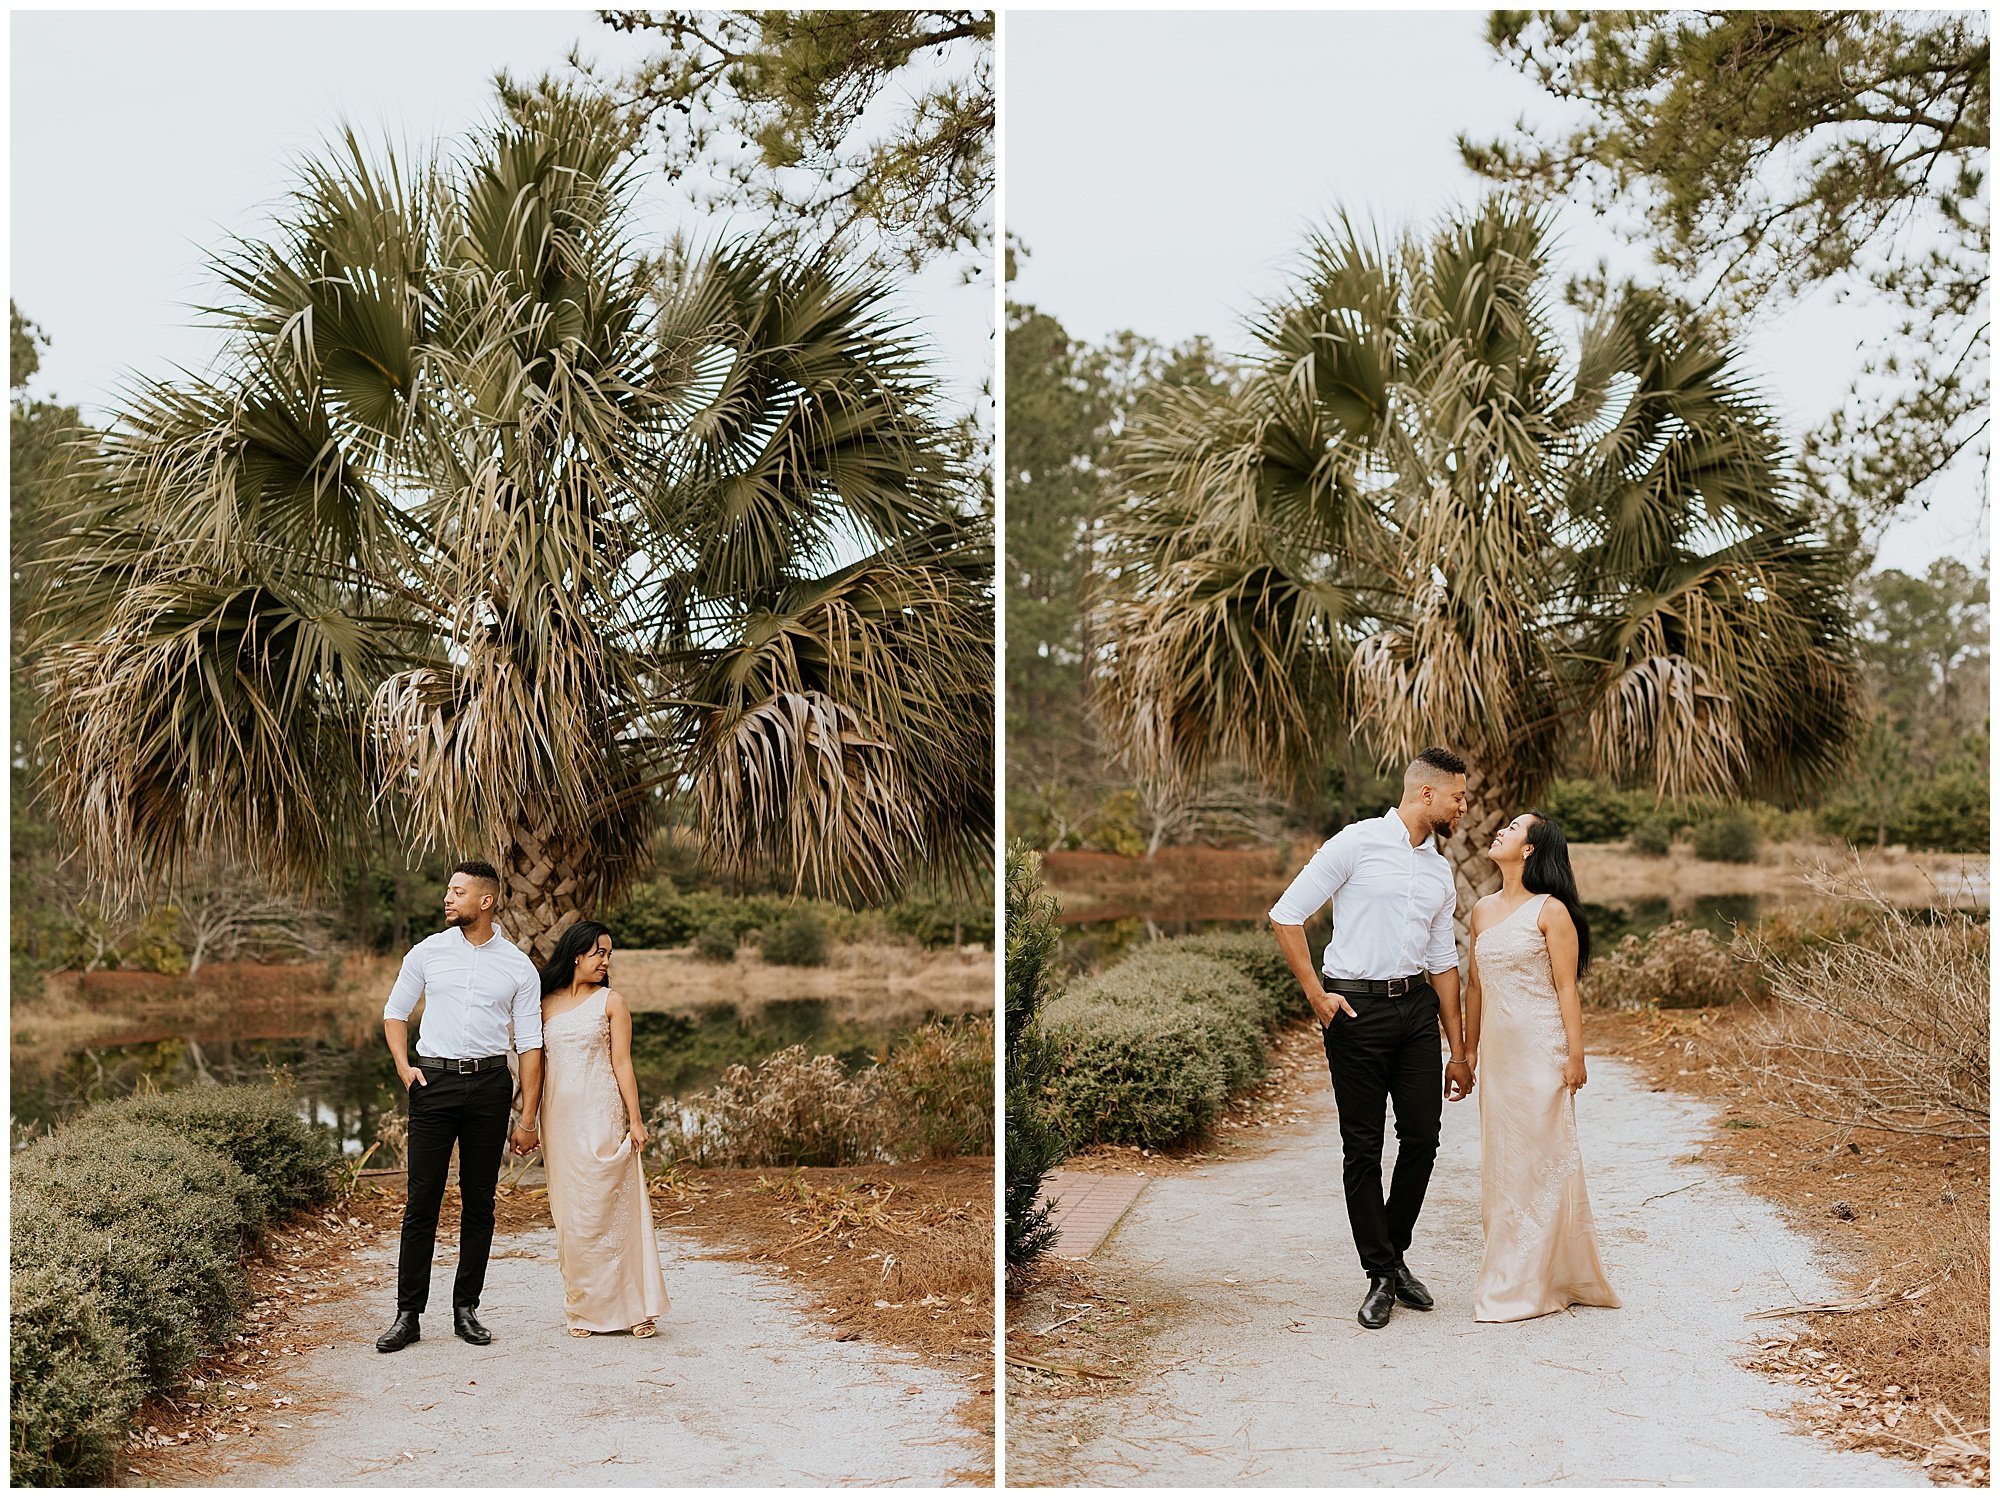 Savannah Engagement, Palm tree in Engagement, Georgia Wedding/Engagement Photographer